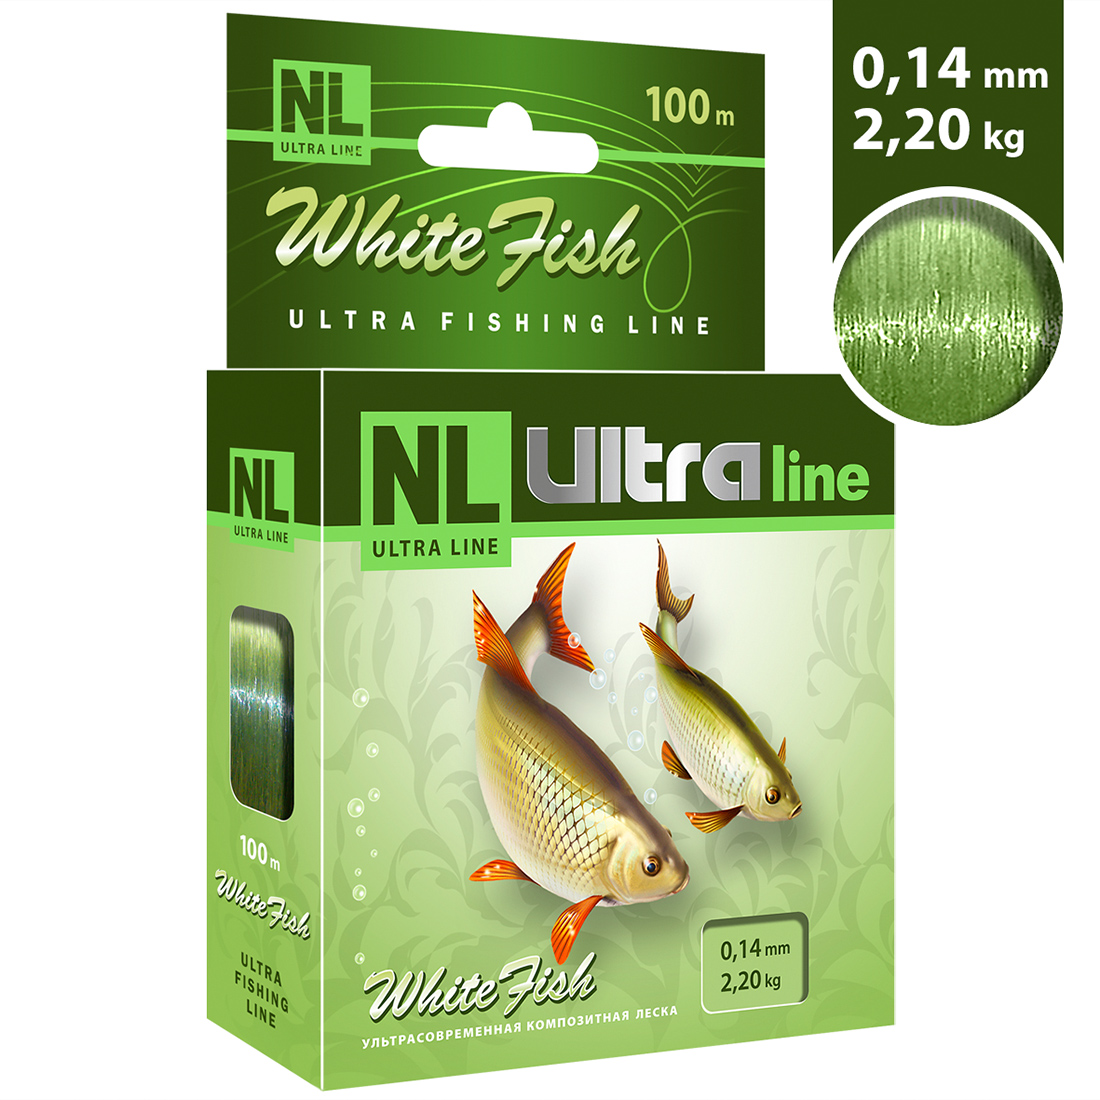 Леска AQUA NL ULTRA WHITE FISH (Белая рыба) 100m 0,14mm, светло-зеленая, test - 2,20kg